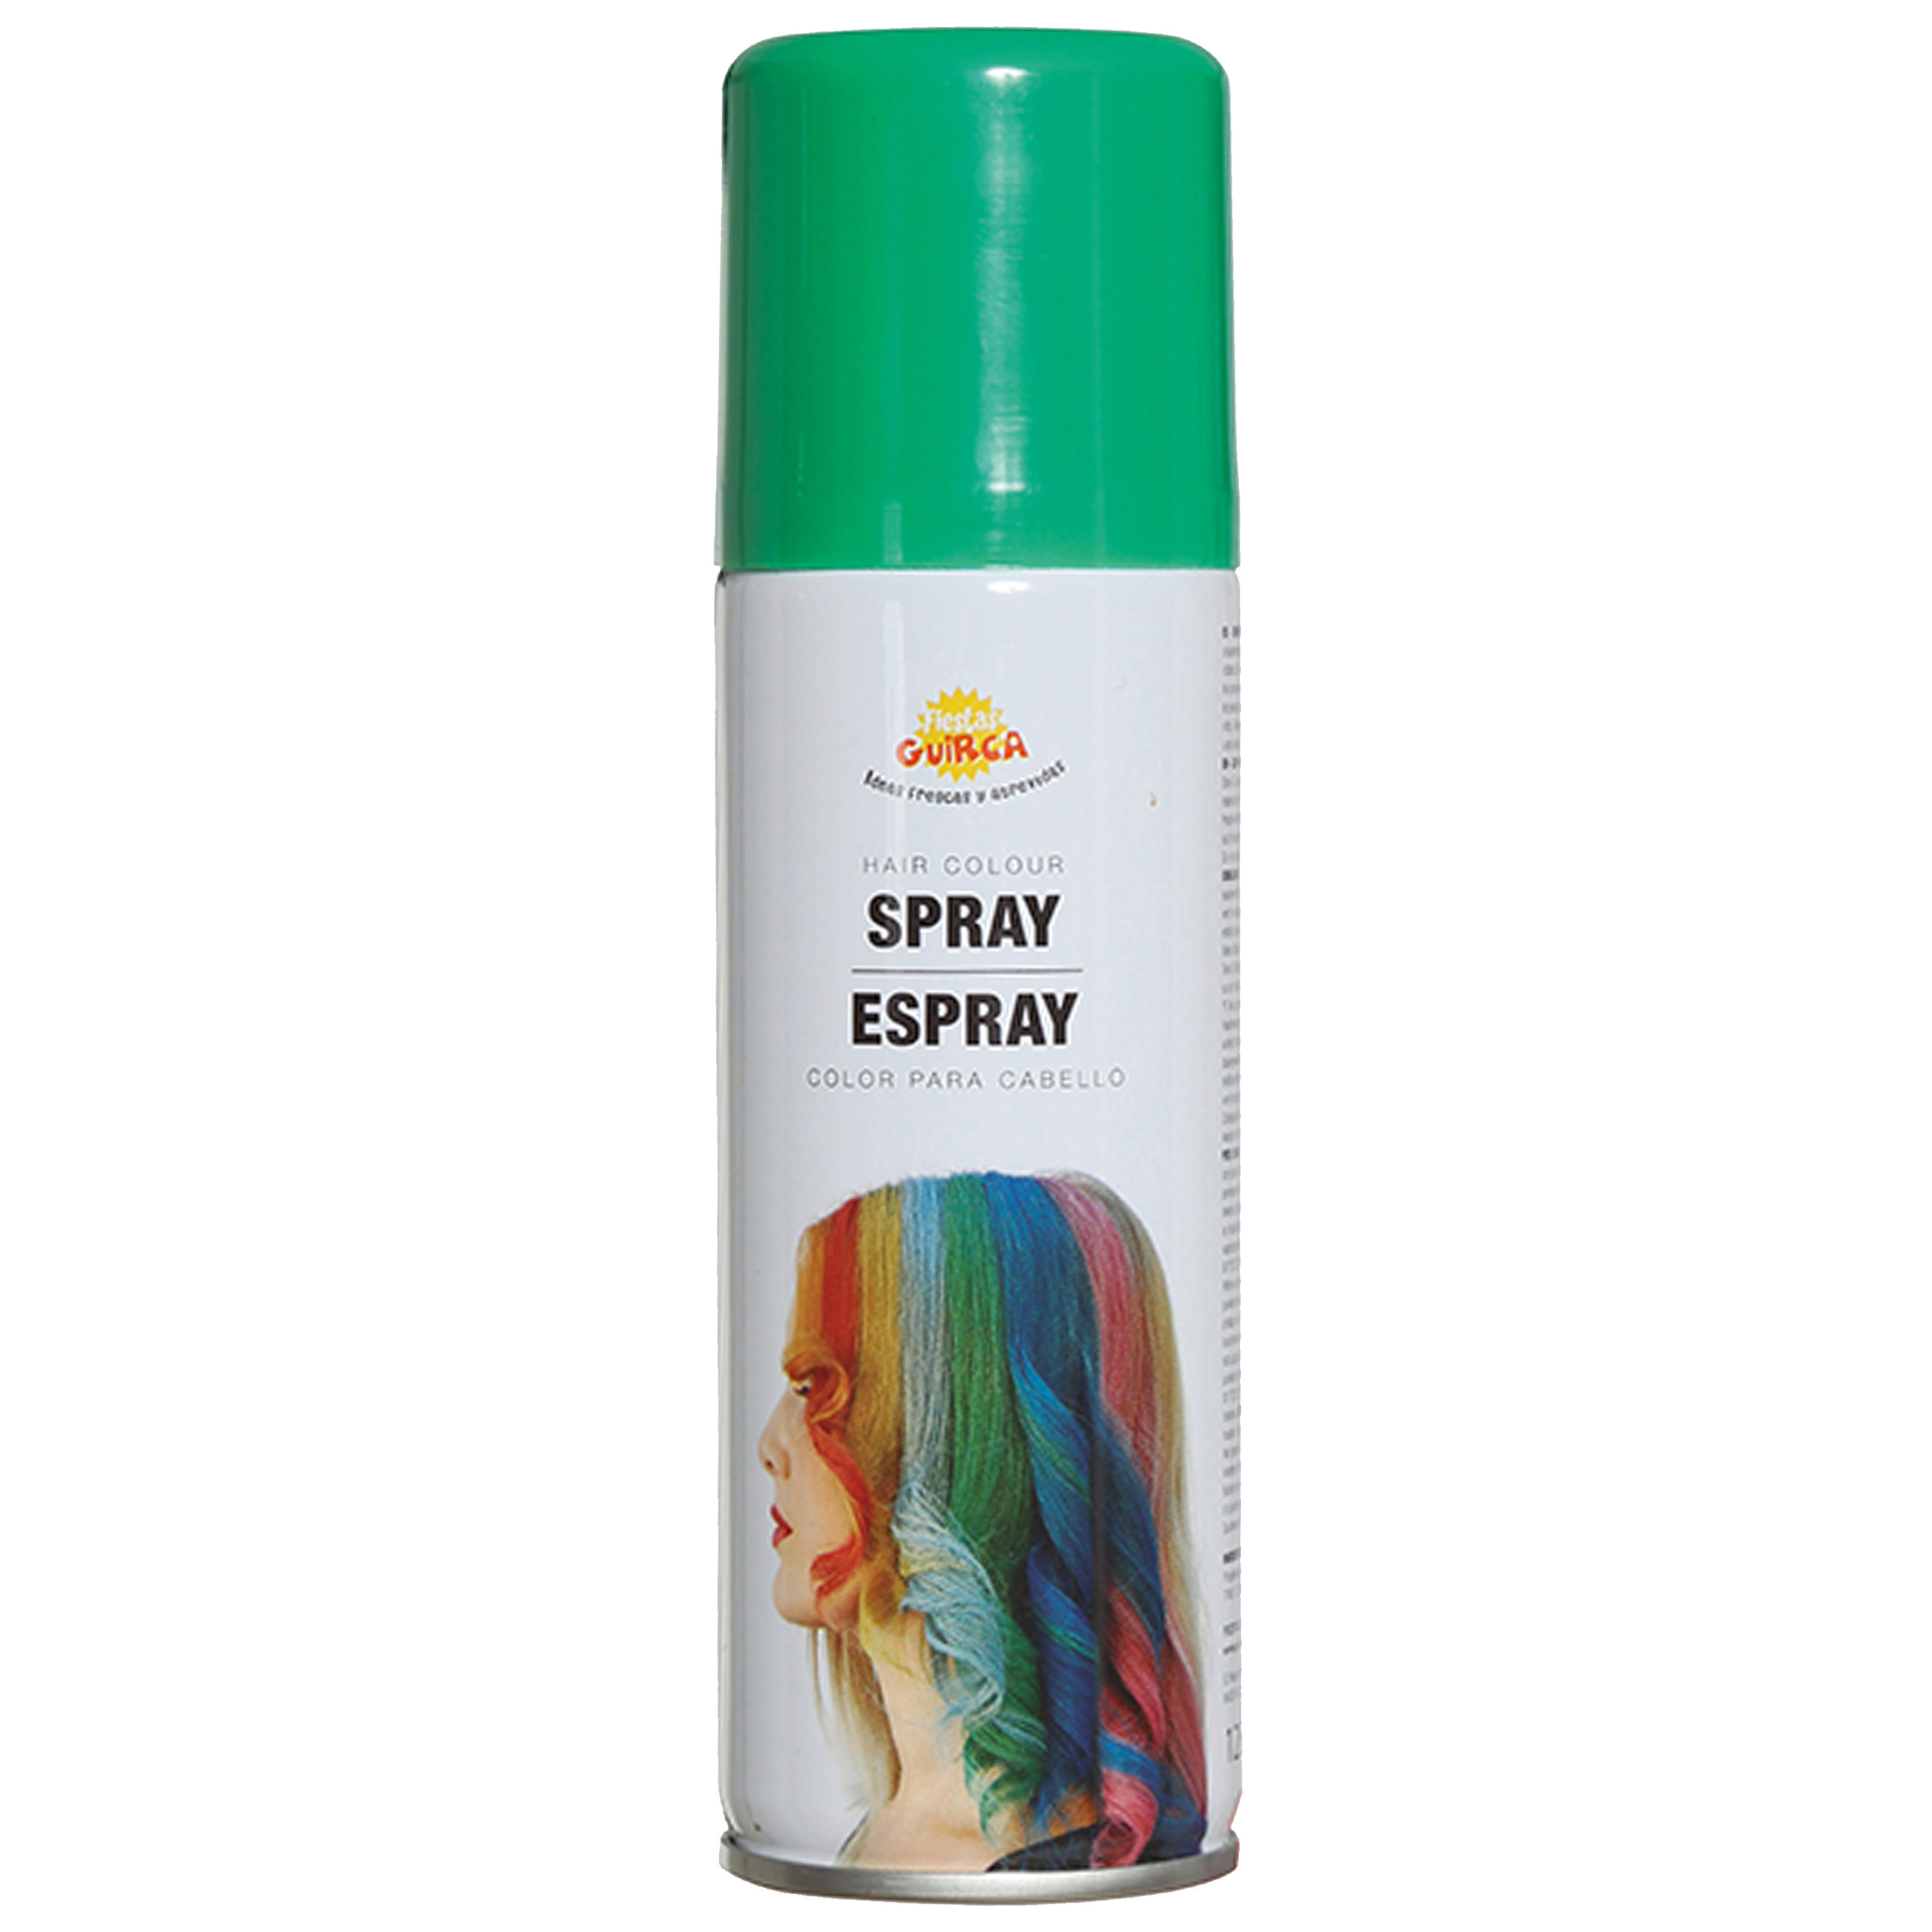 Afbeelding van Carnaval verkleed haar verf/spray - groen - spuitbus - 125 ml